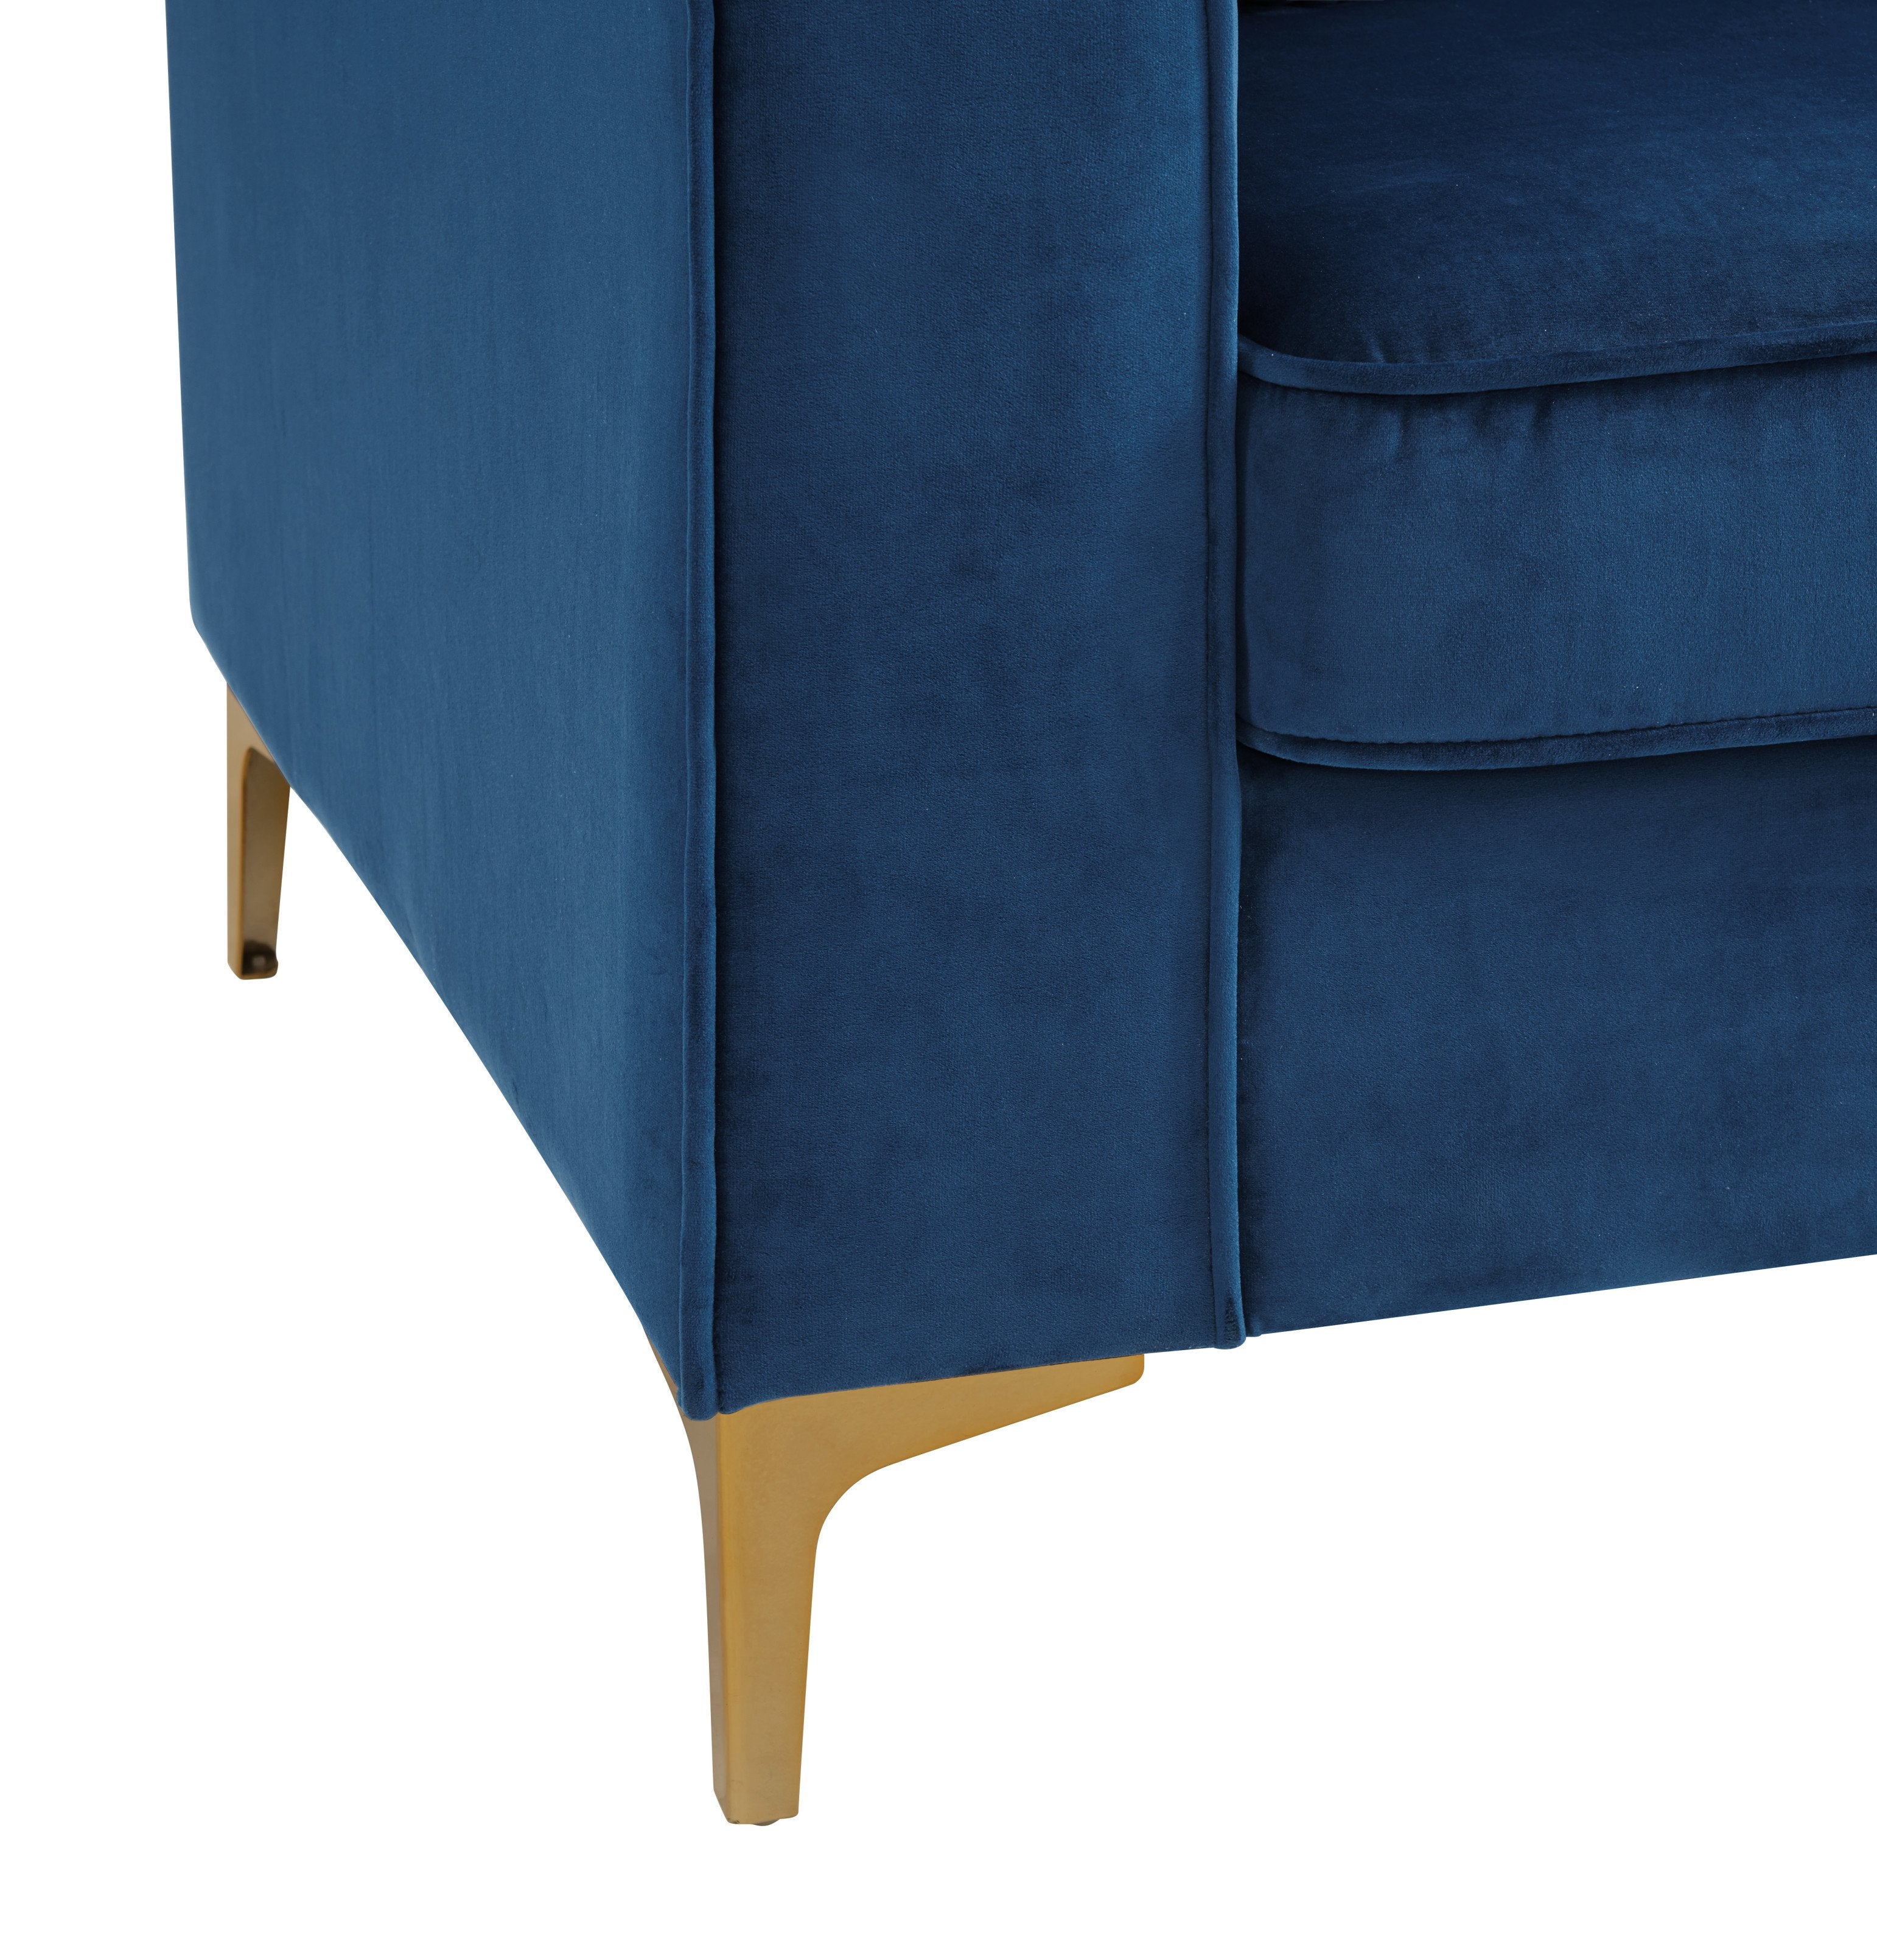 Britannia Modular Chaise Velvet Sectional Sofa With Gold Legs